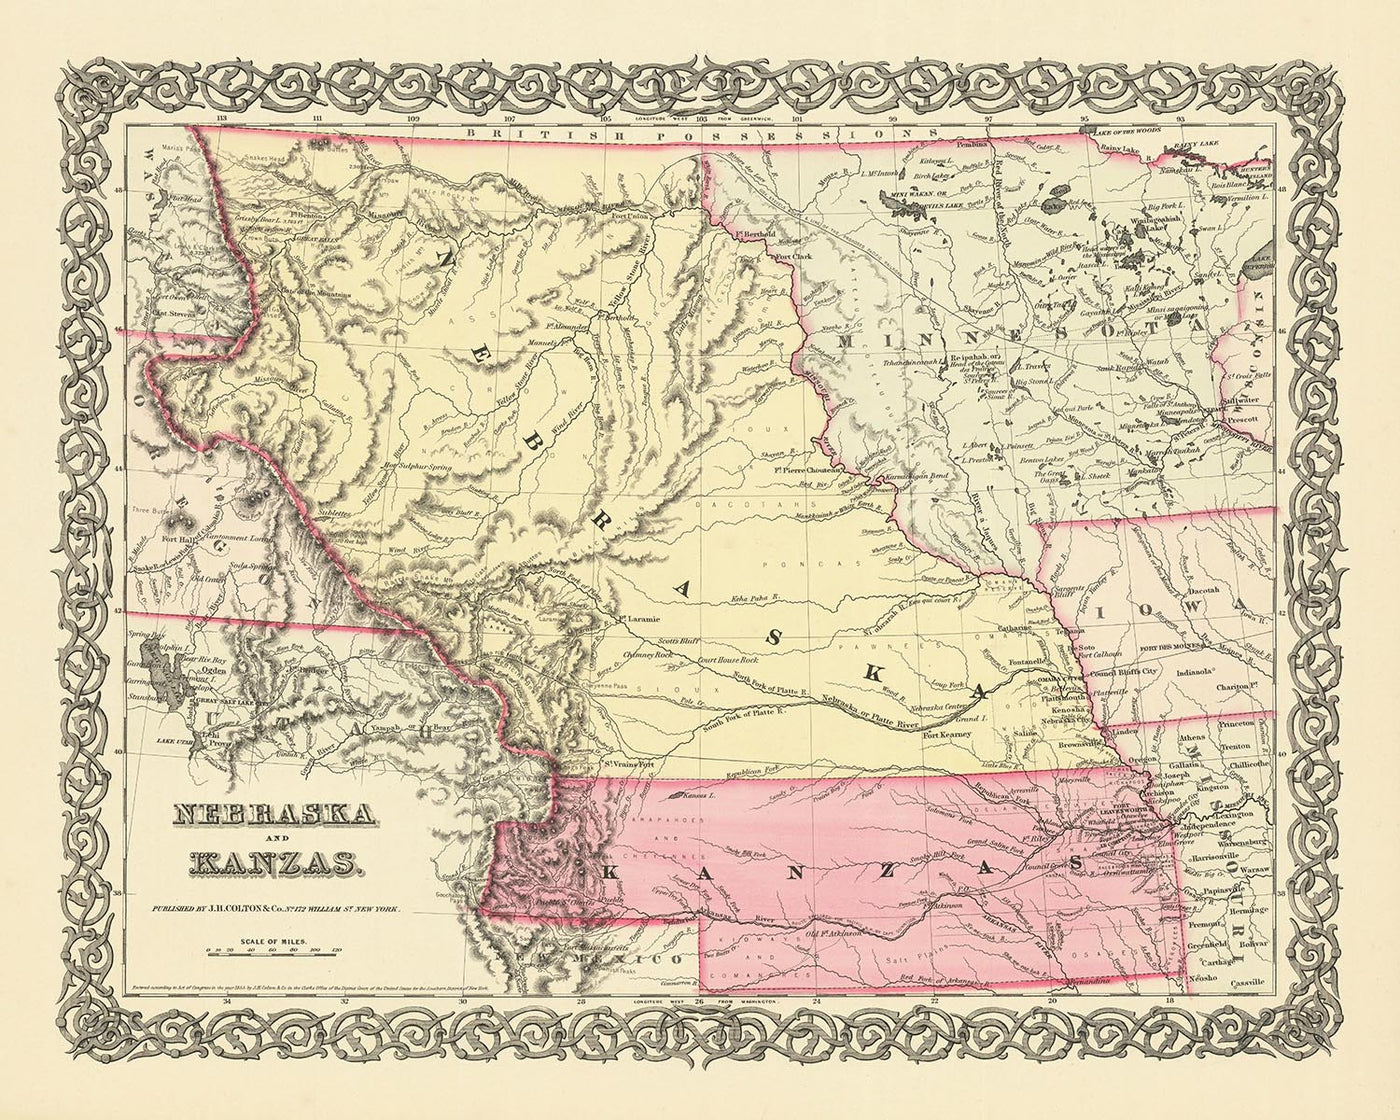 Old Map of Nebraska & Kansas by Colton, 1856: Omaha, Bellevue, Nebraska City, Leavenworth, Lawrence